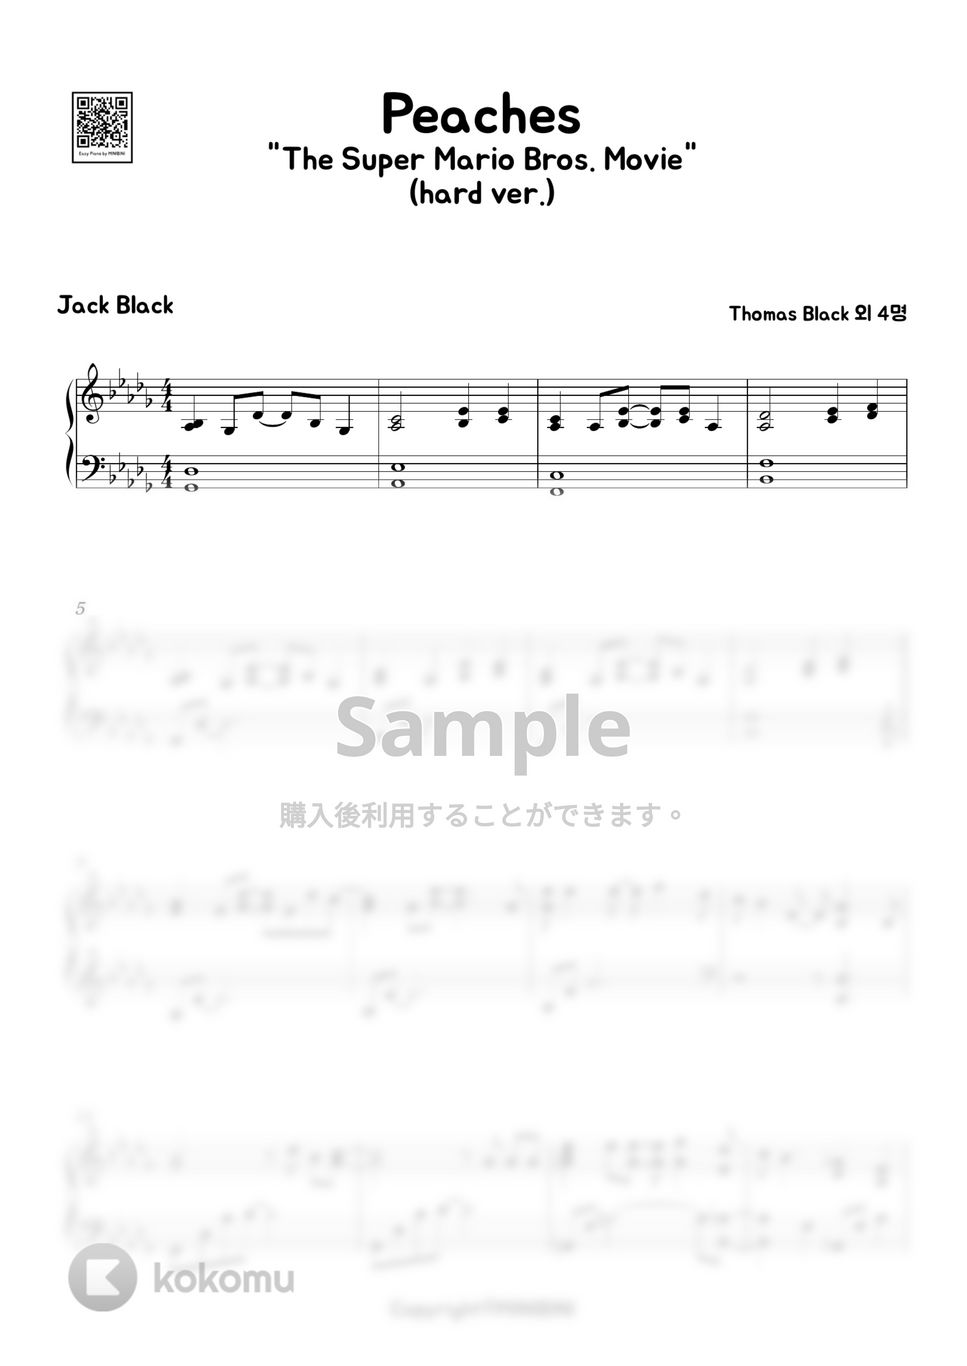 Jack Black - Peaches(Hard Ver.) (スーパーマリオブラザーズ) by MINIBINI